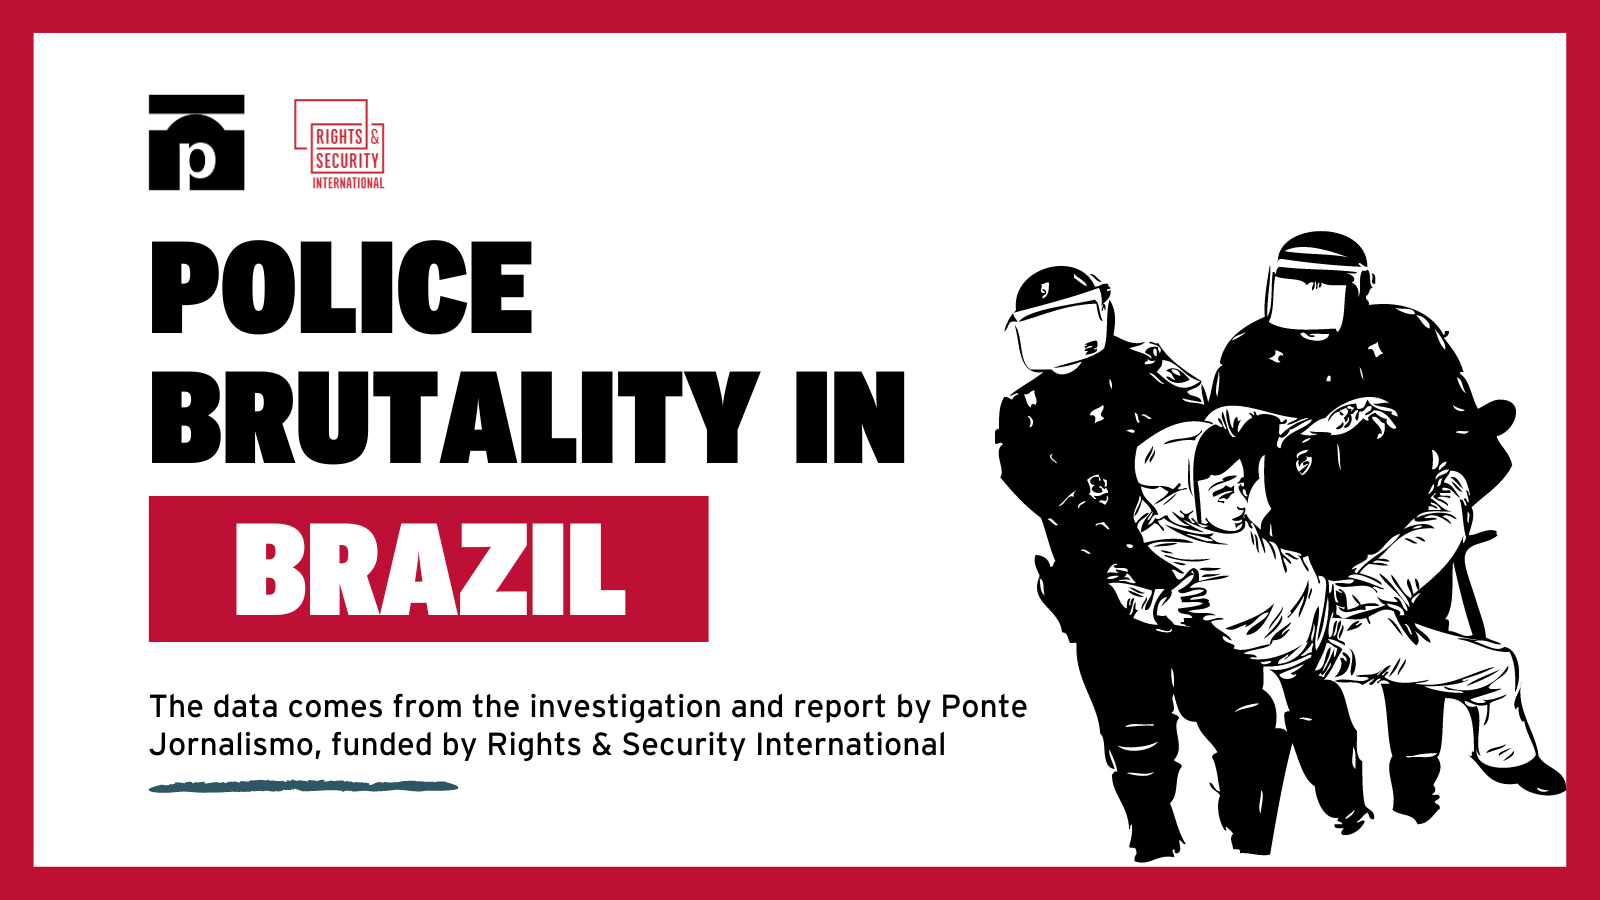 Ponte Jornalismo - Keeping an eye on the police